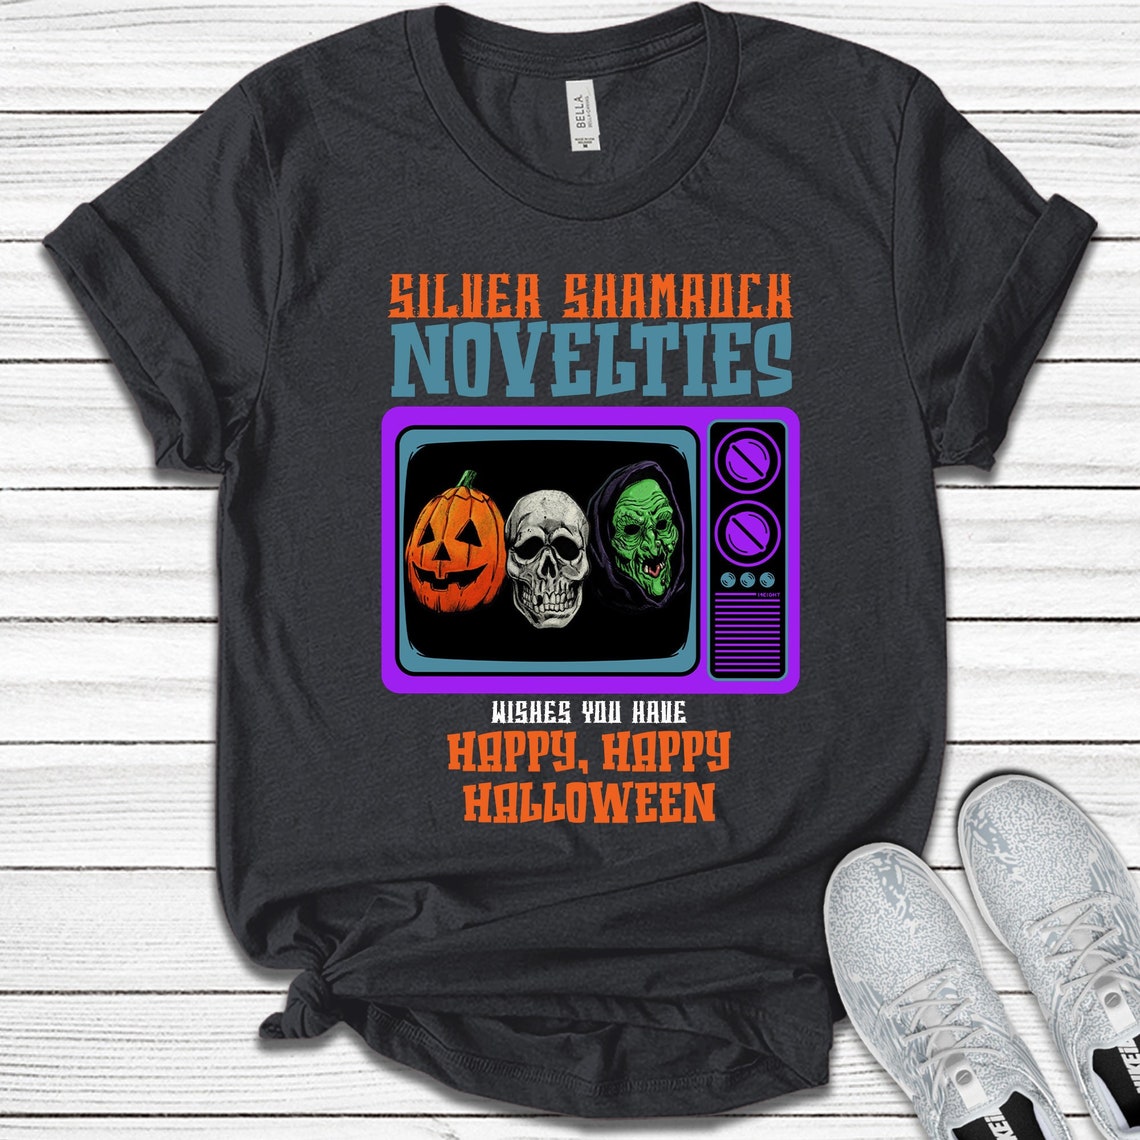 Happy Halloween Shirt, Silver Shamrock Novelties wishes you a Very Shirt, skeleton with Pumpkin, witch Shirt, Horror Halloween